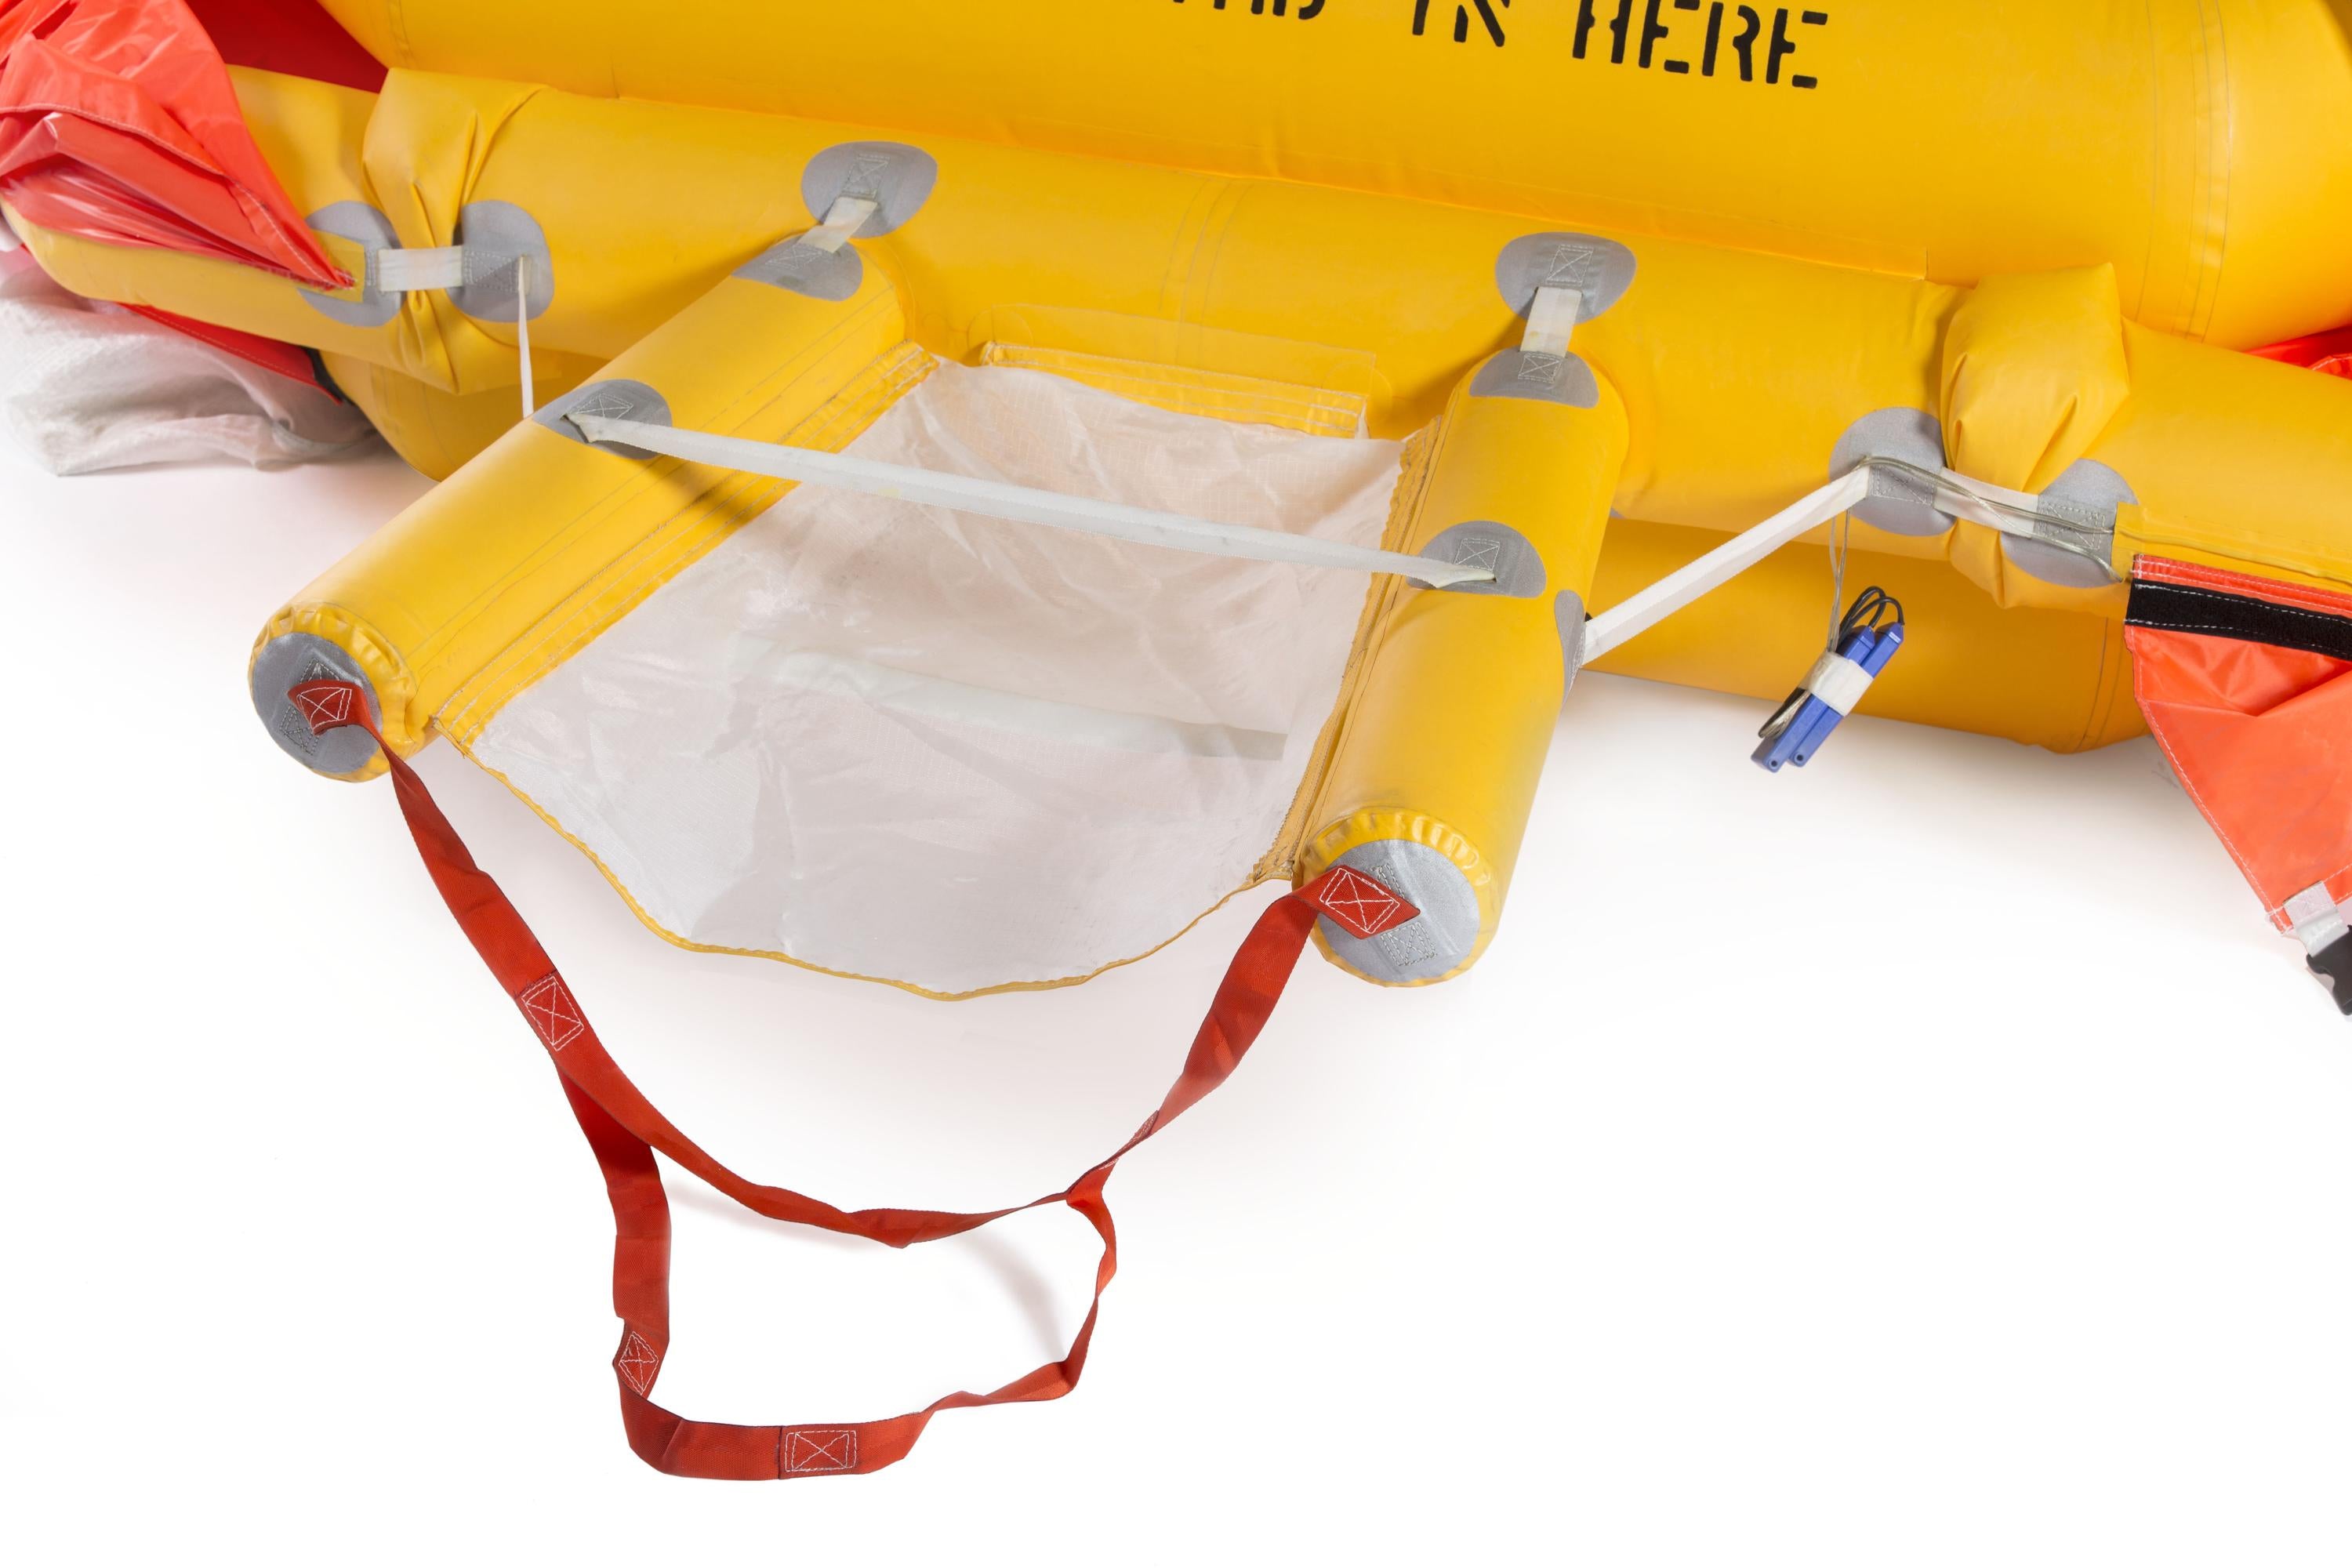 412/212/210 tri bag float system with liferafts, external hoist compatible 